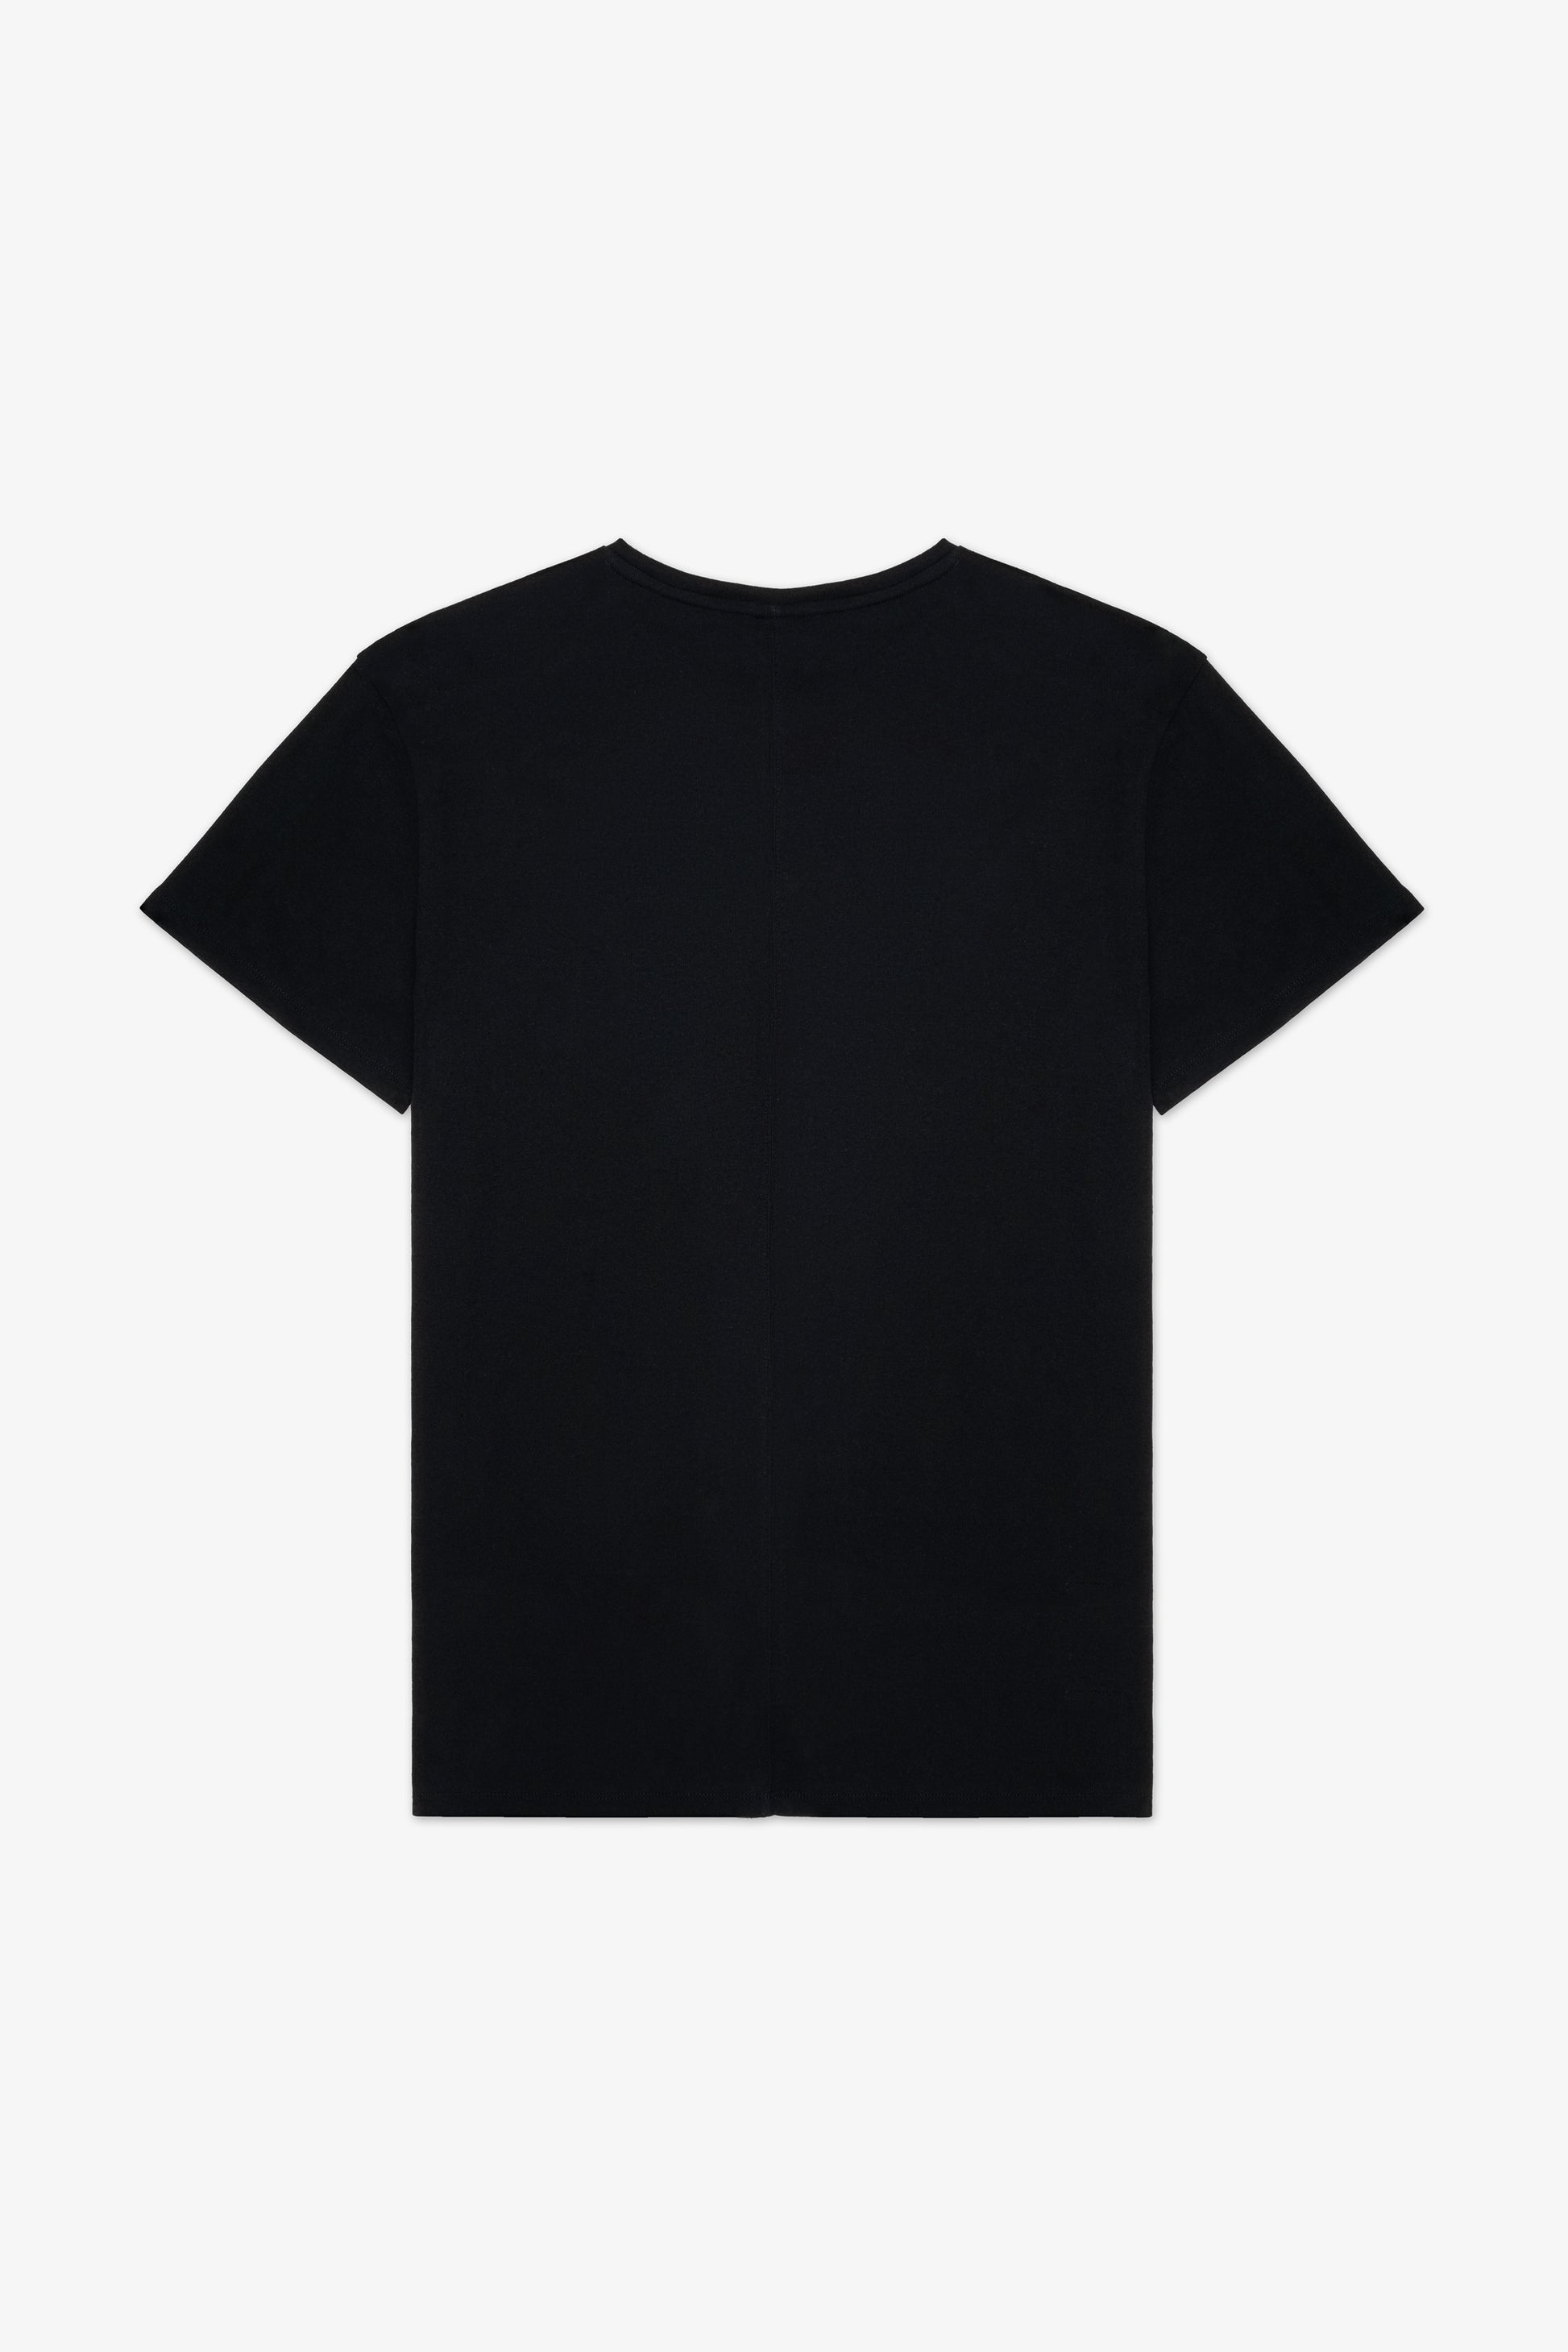 Back of black basic t-shirt